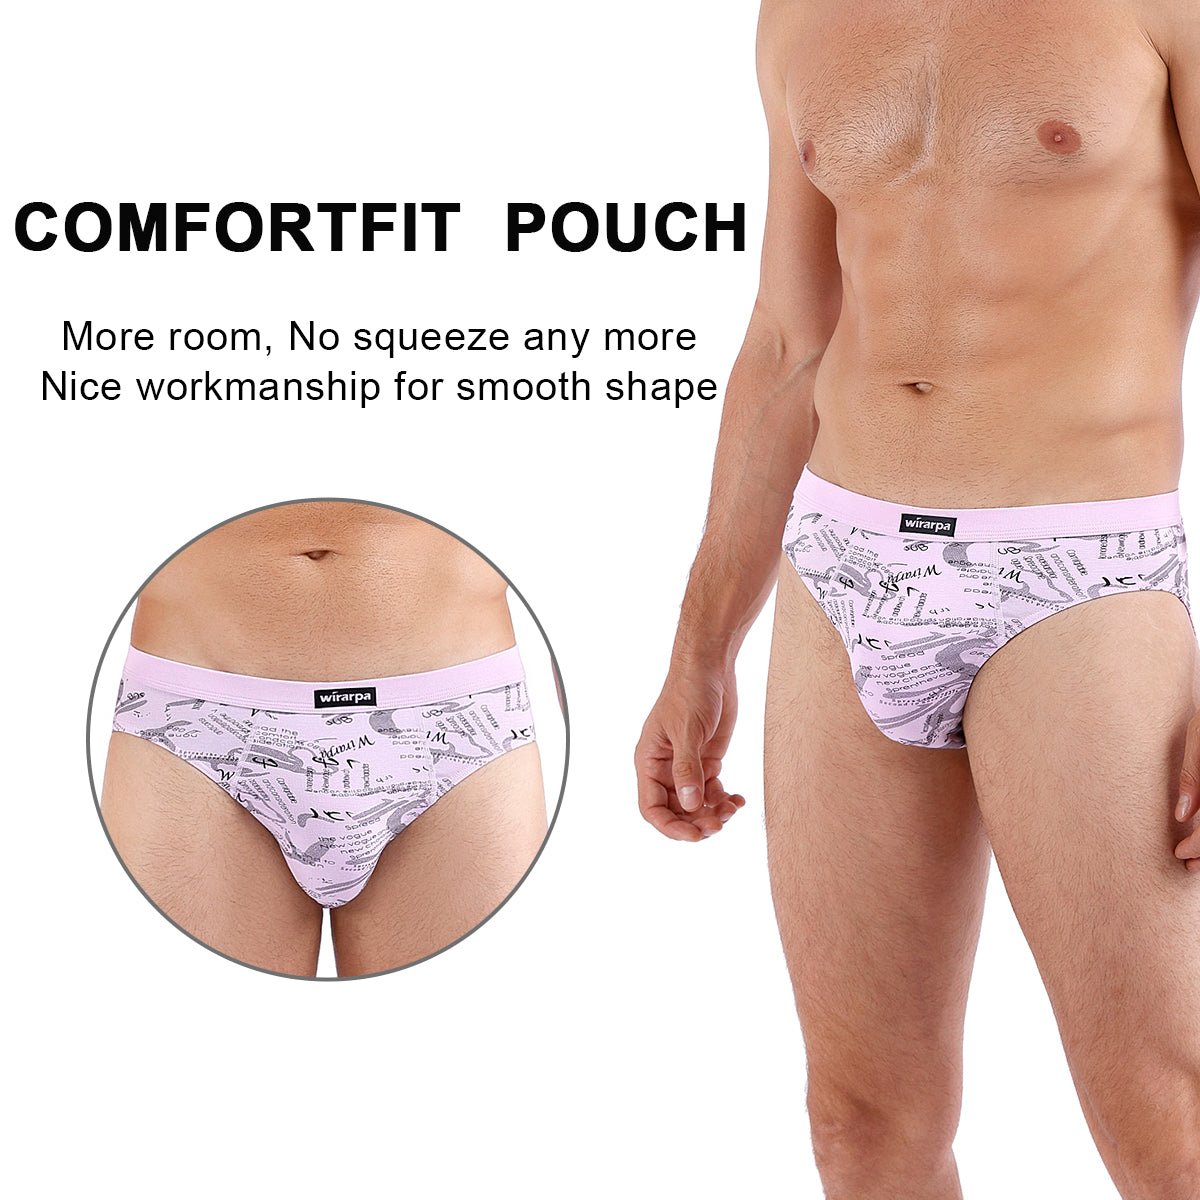 wirarpa Men's Underwear Modal Microfiber Briefs No Fly Covered